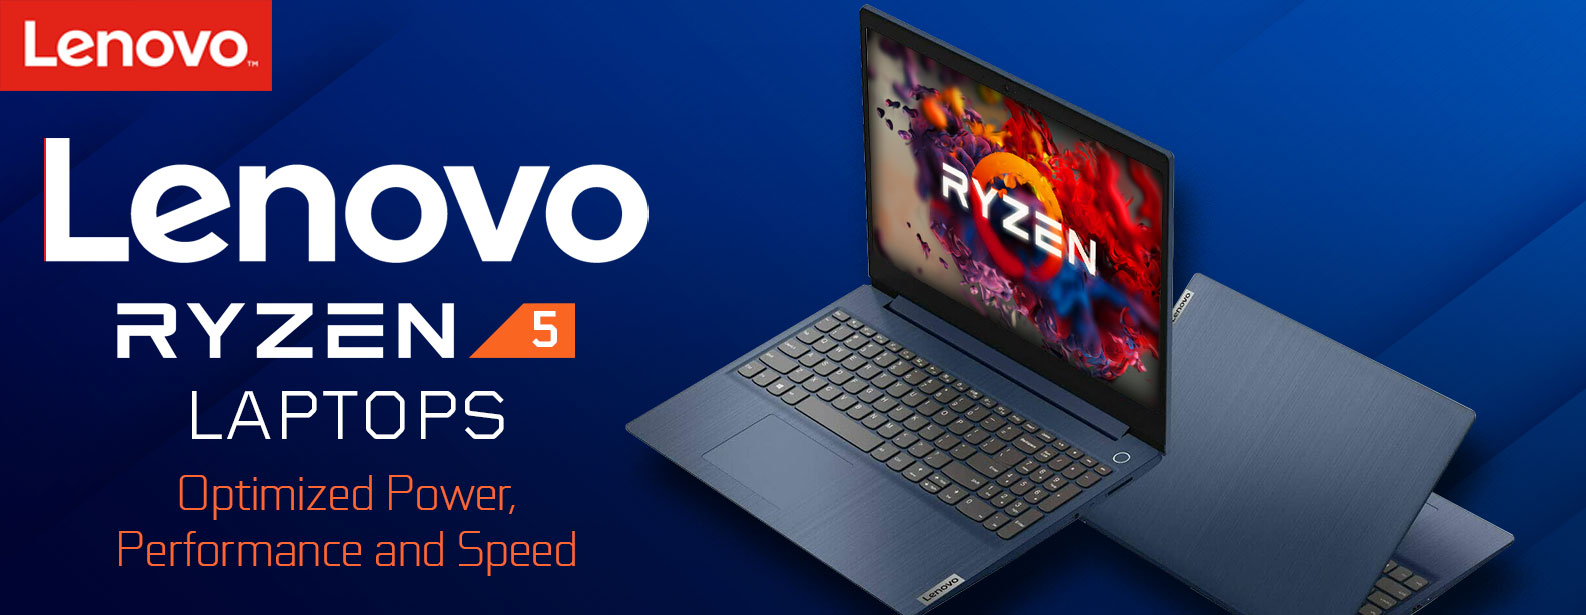 Lenovo Ryzen 5 Laptop Deals